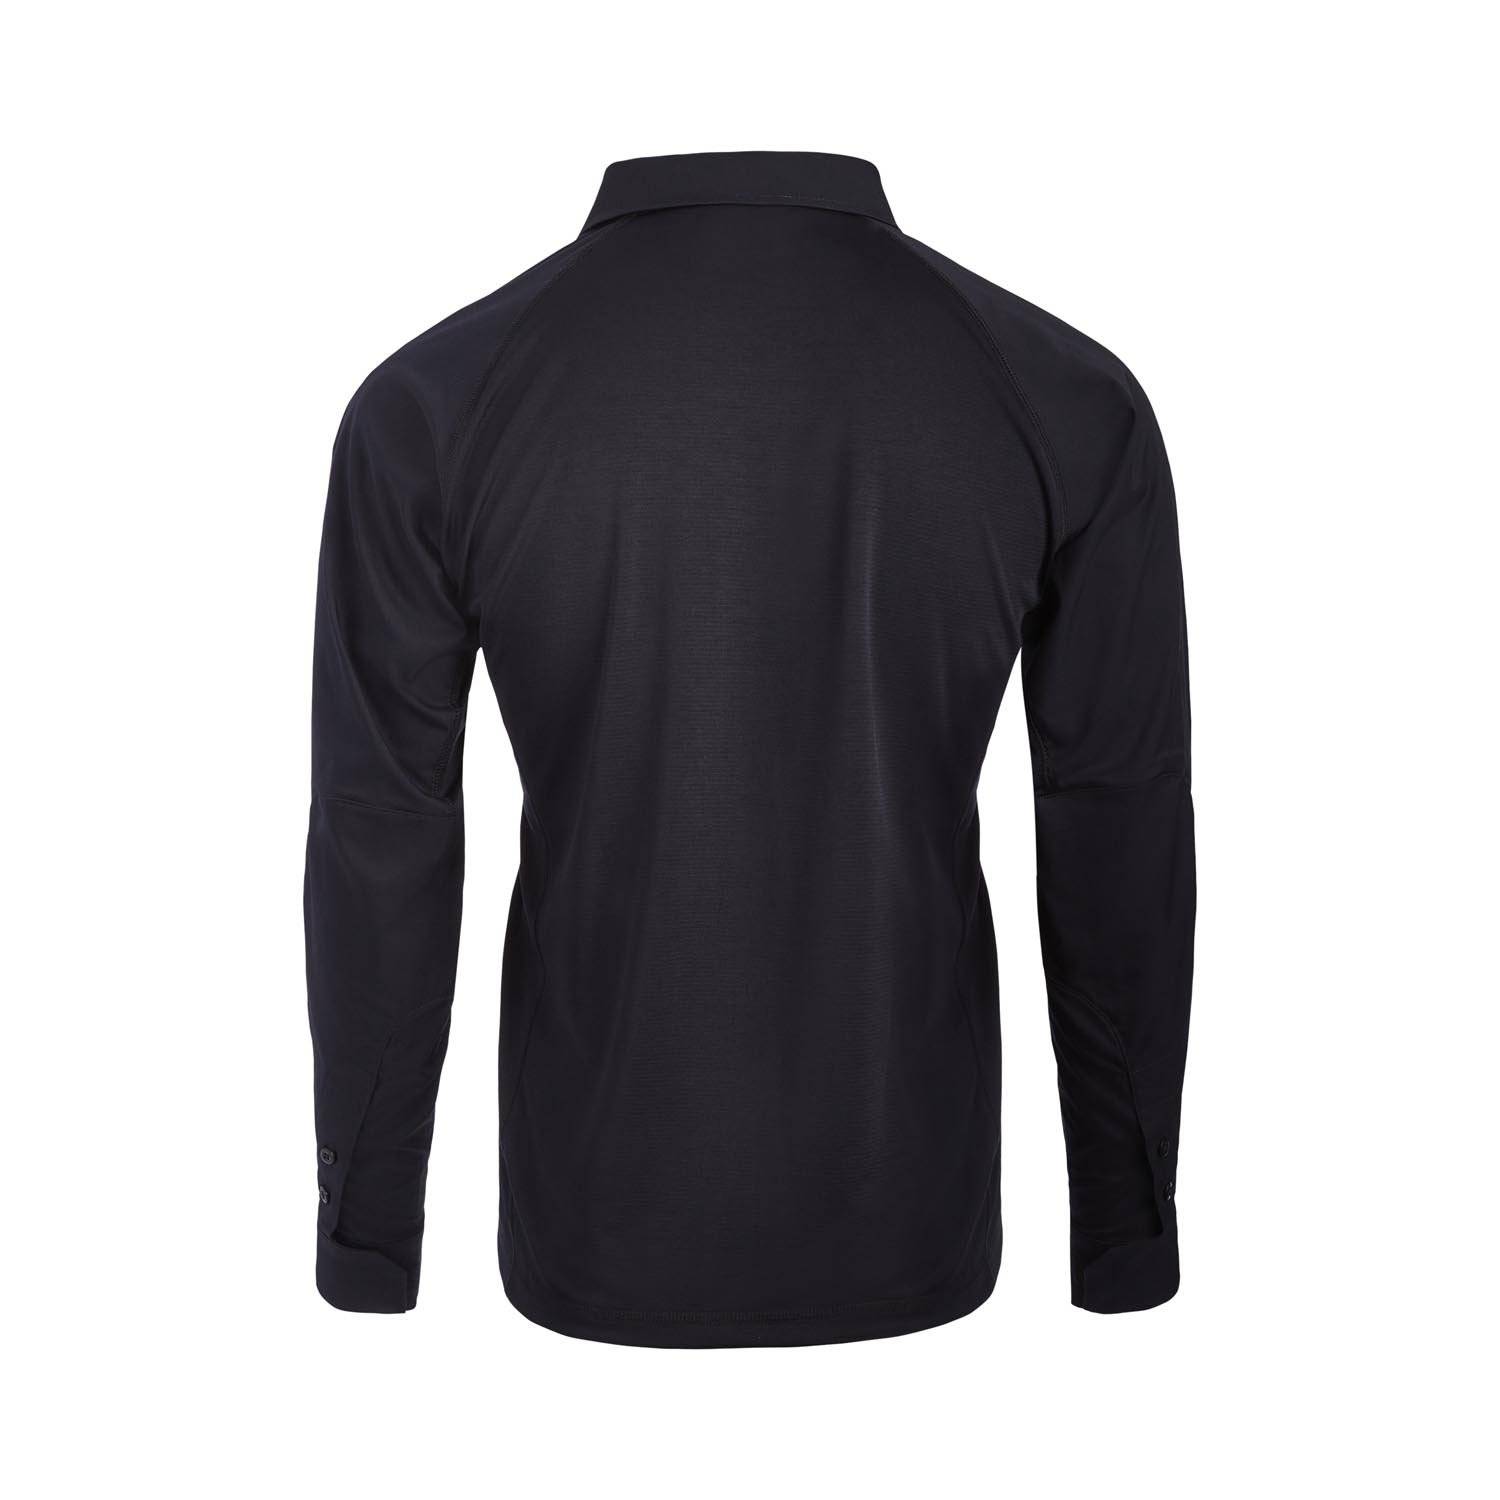 Vertx Fusion Flex Hybrid Long Sleeve Shirt | Galls